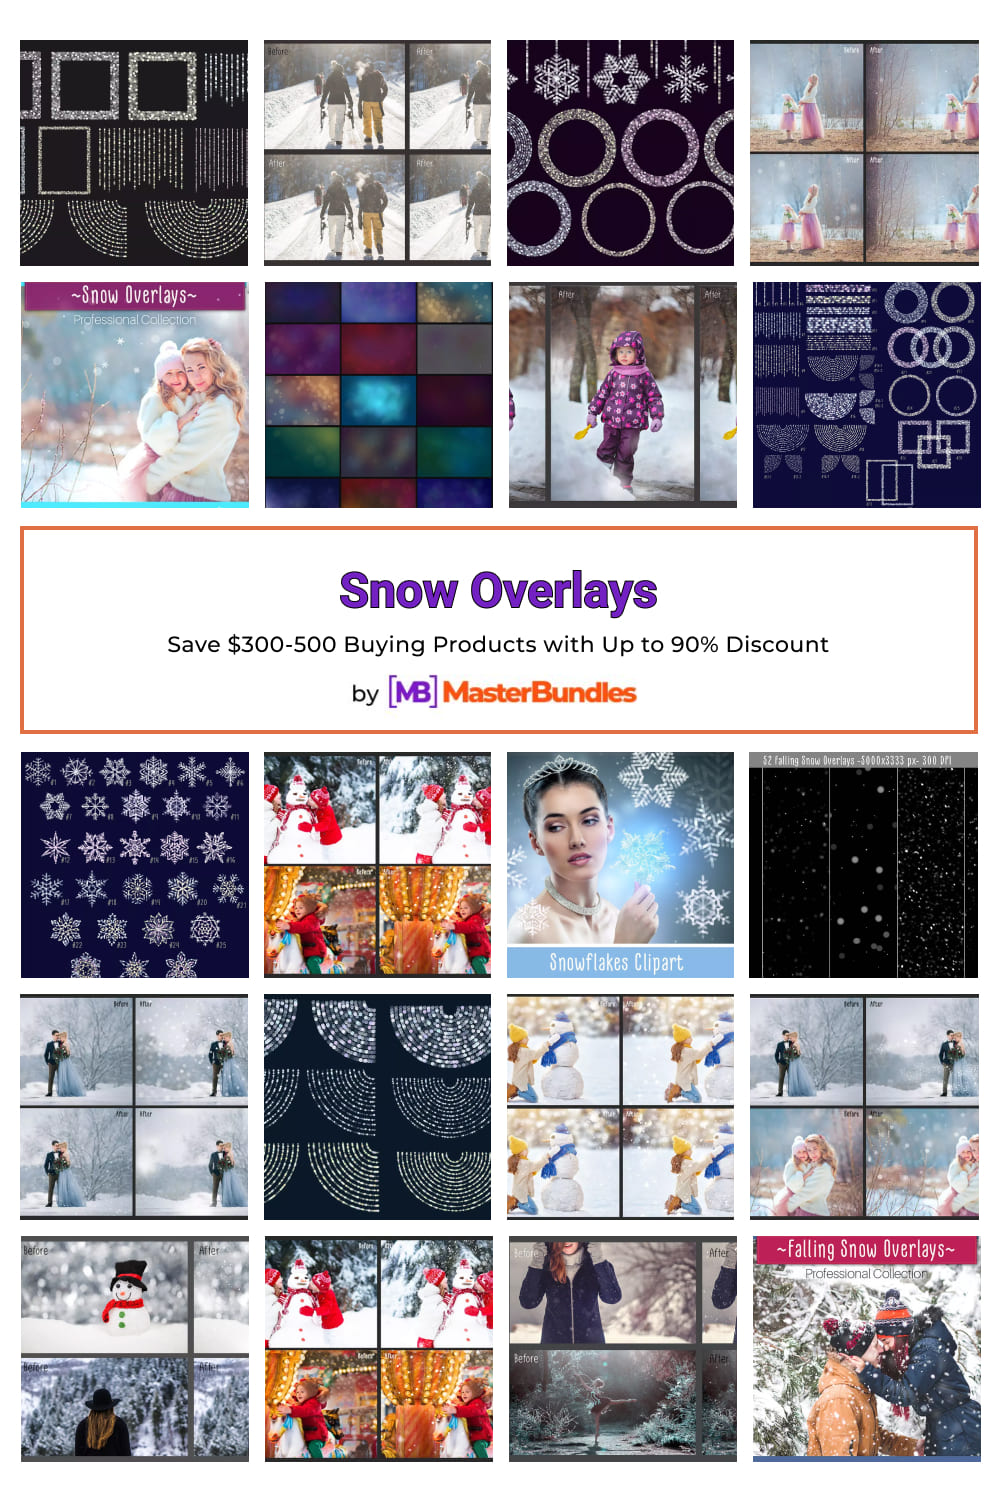 Snow Overlays Pinterest image.